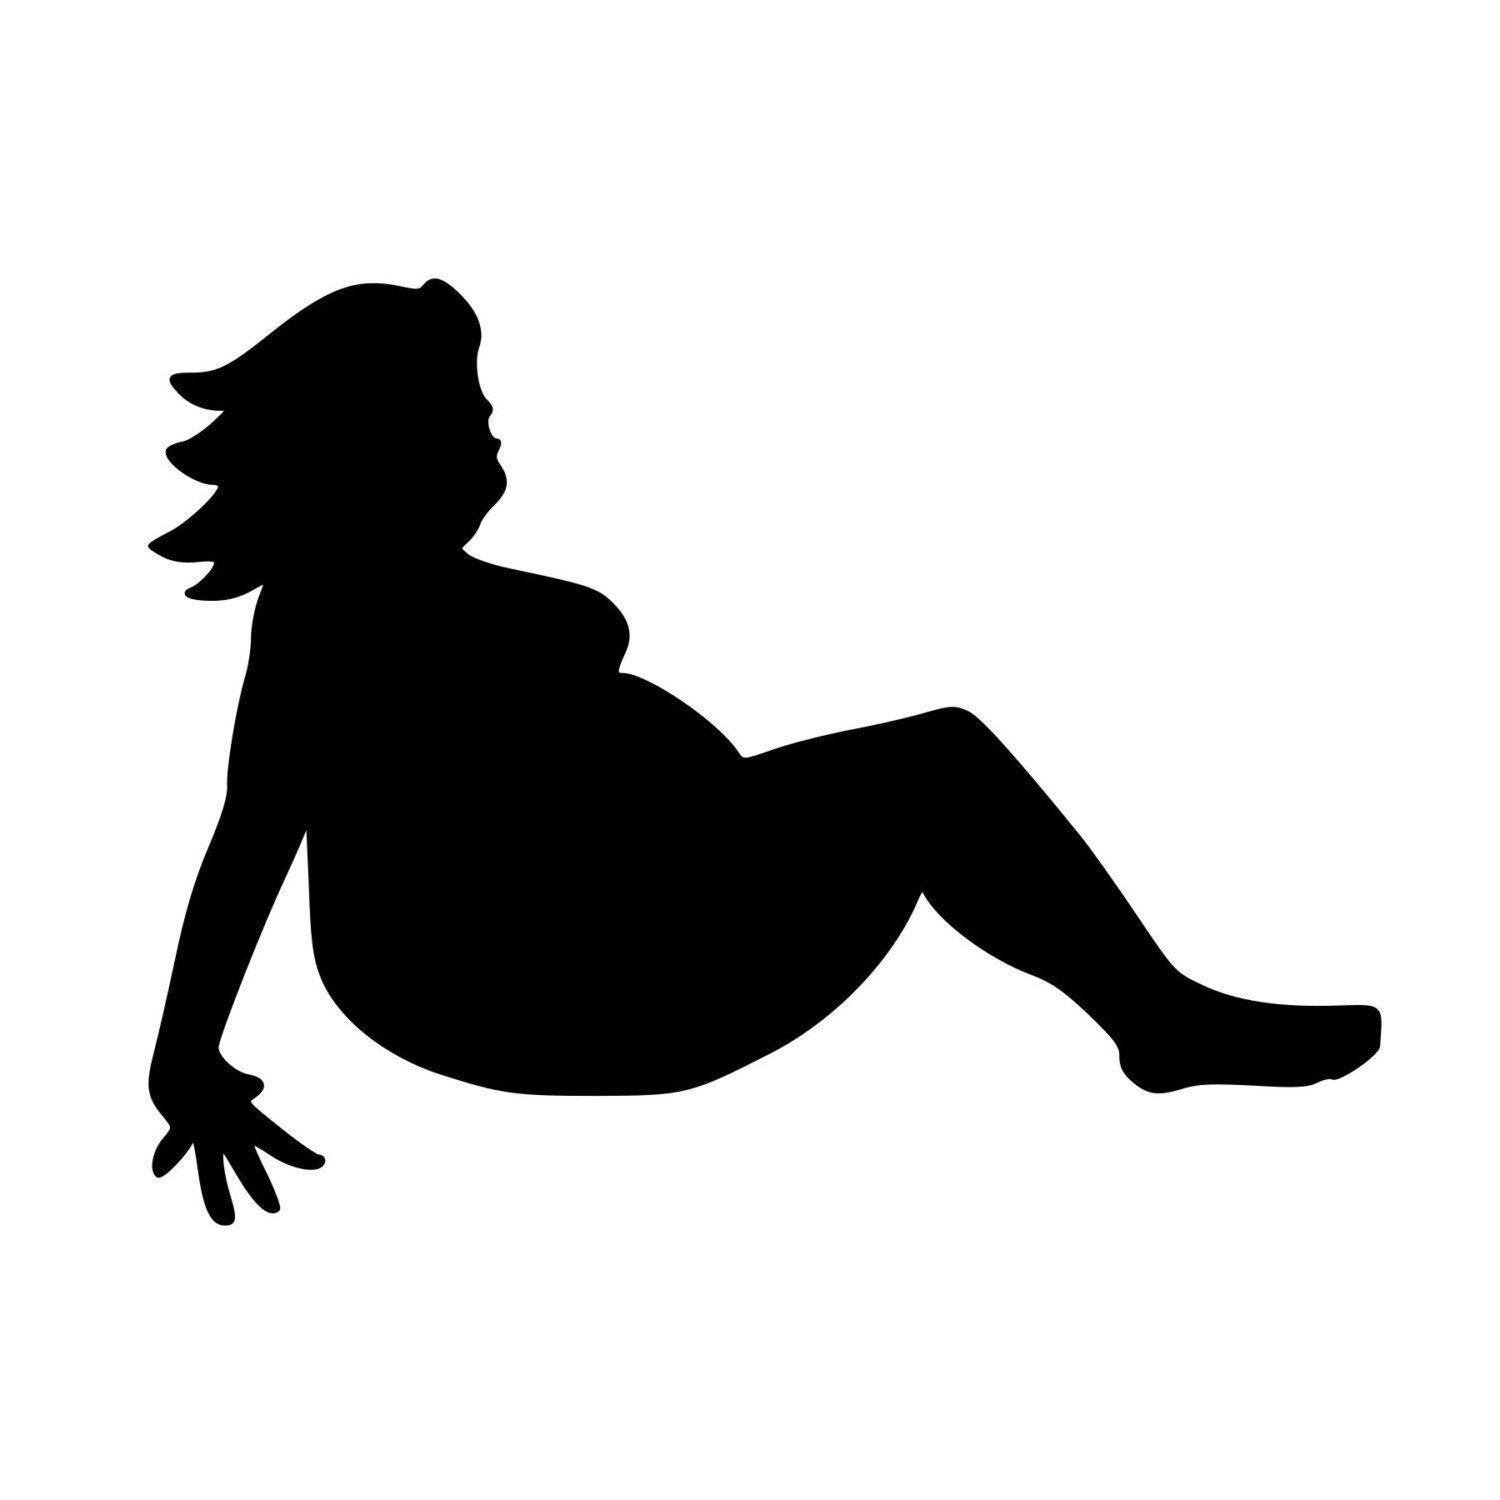 Trucker Girl Logo - MUDFLAP FAT GIRL Vinyl Decal Sticker Trucker Lady Woman